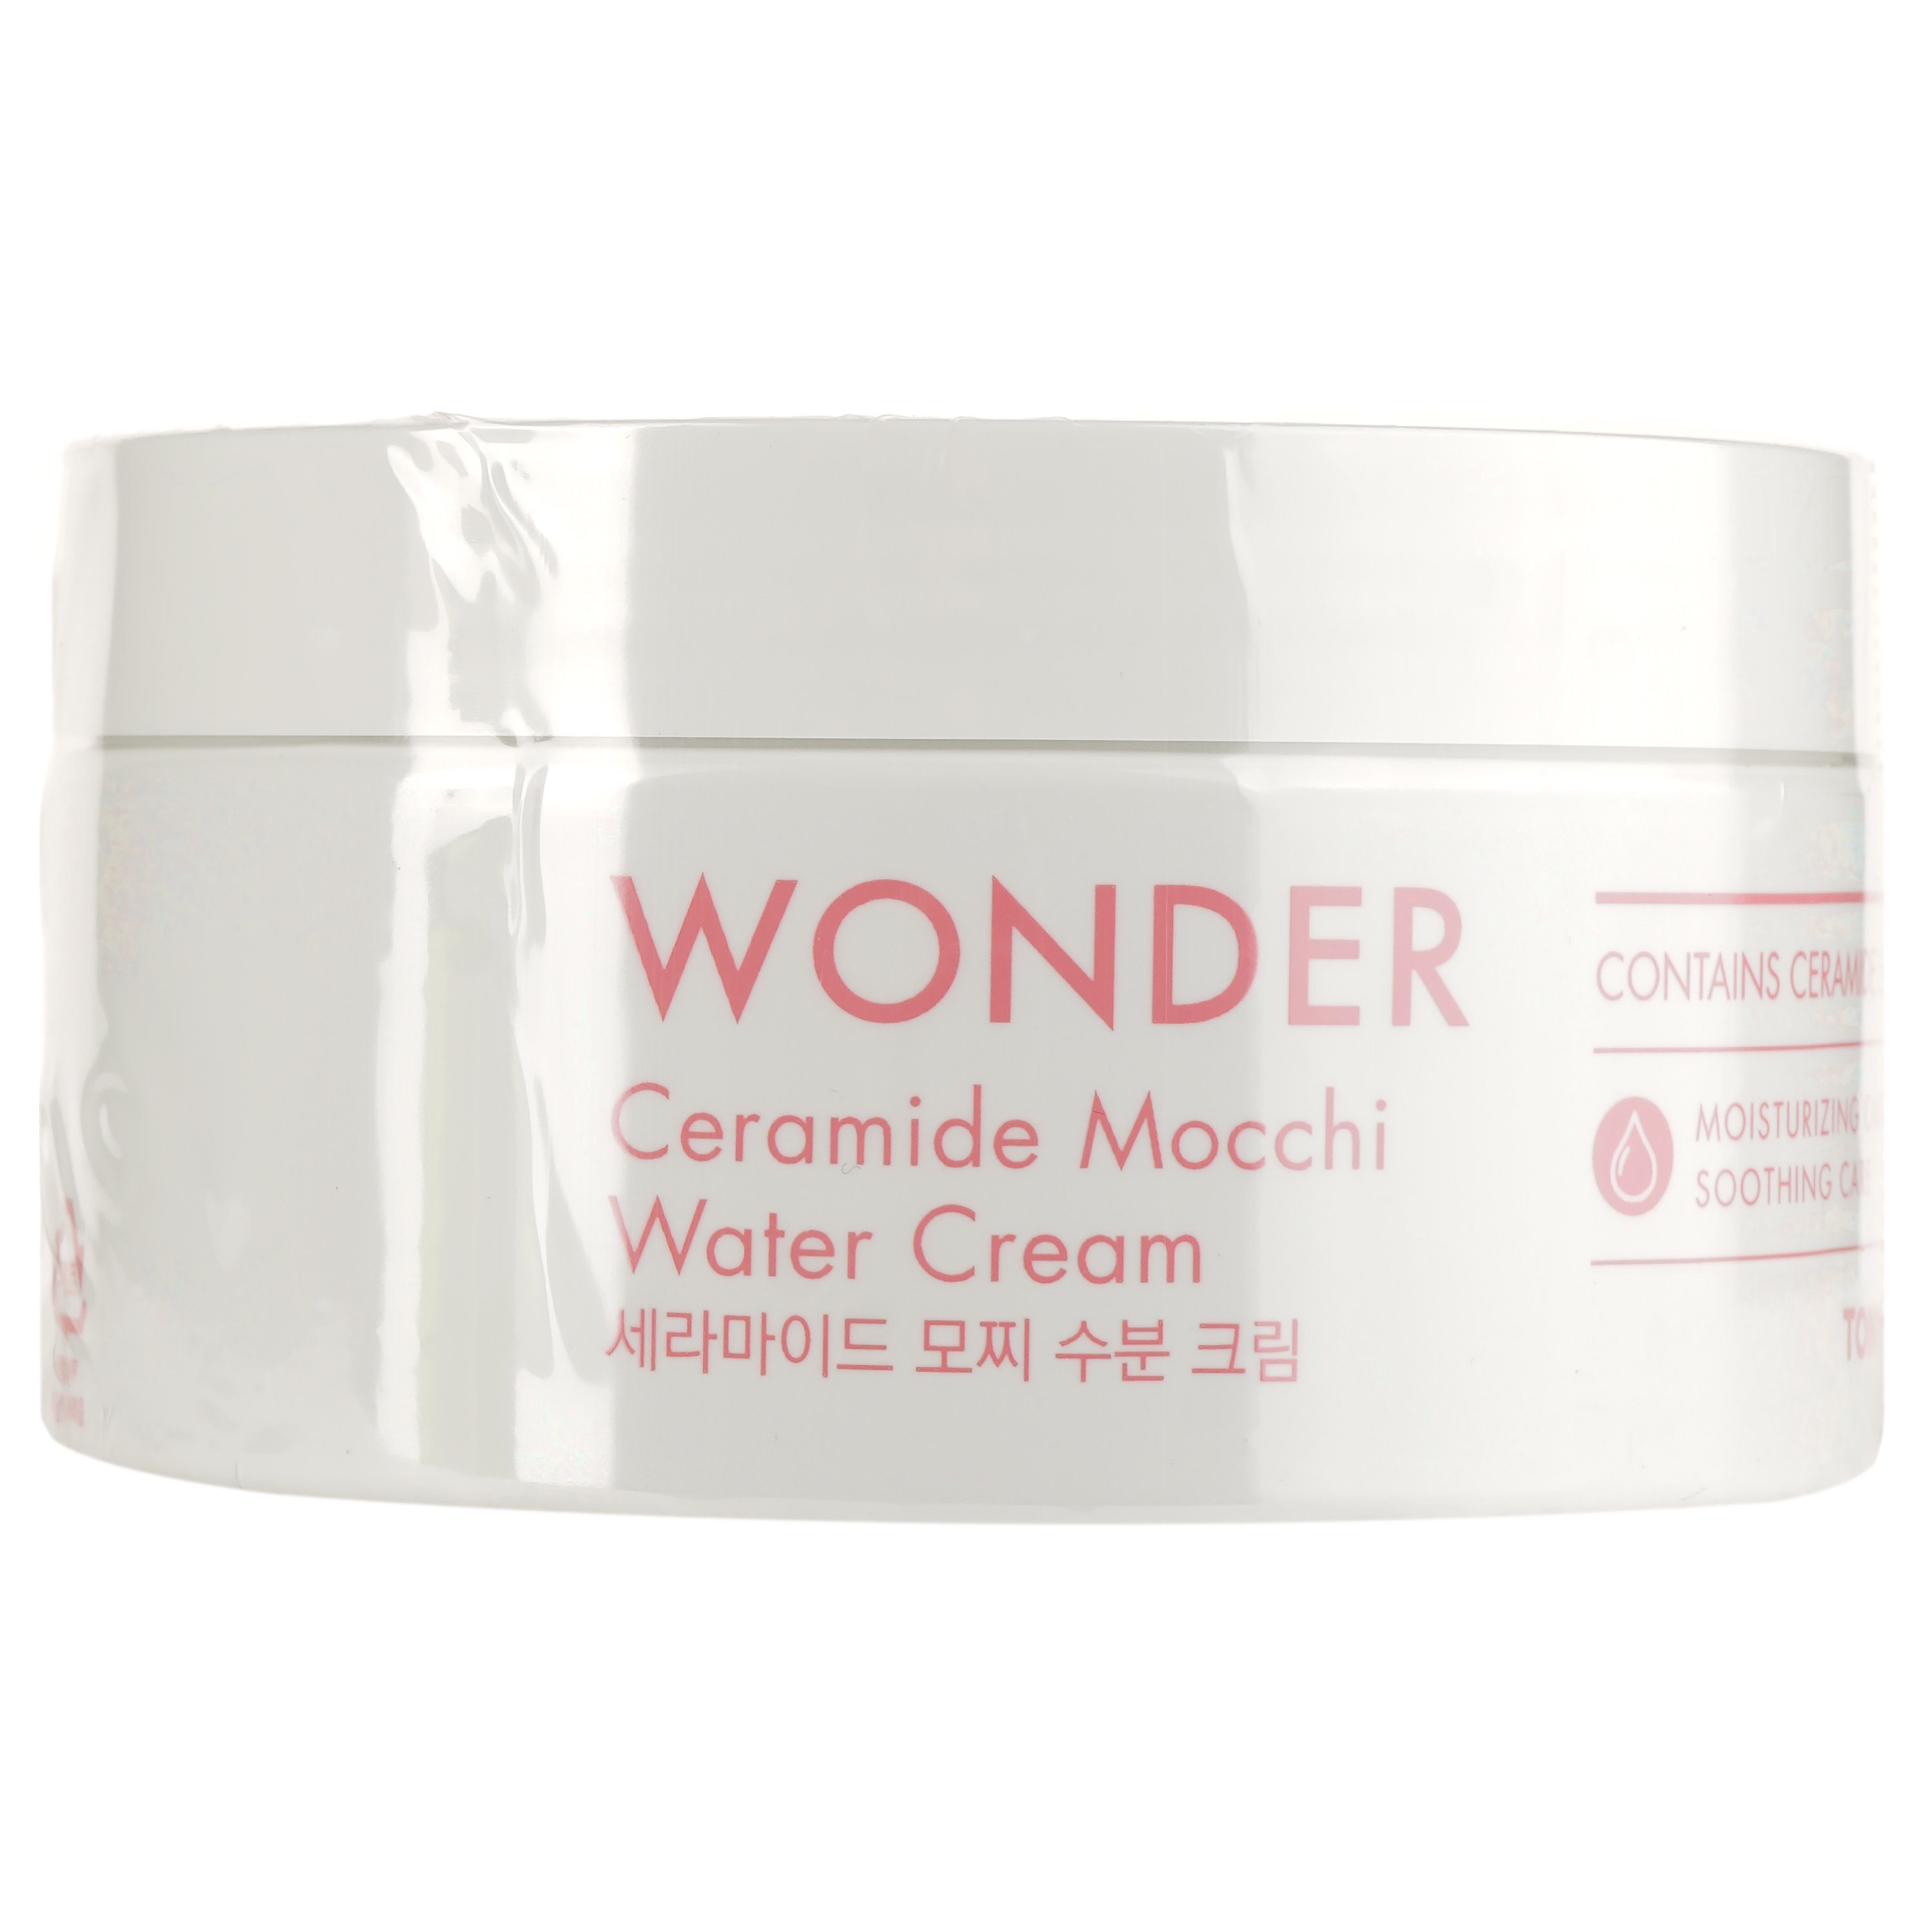 Крем для лица Tony Moly Wonder Ceramide Mocchi Water Cream, 300 мл - фото 7